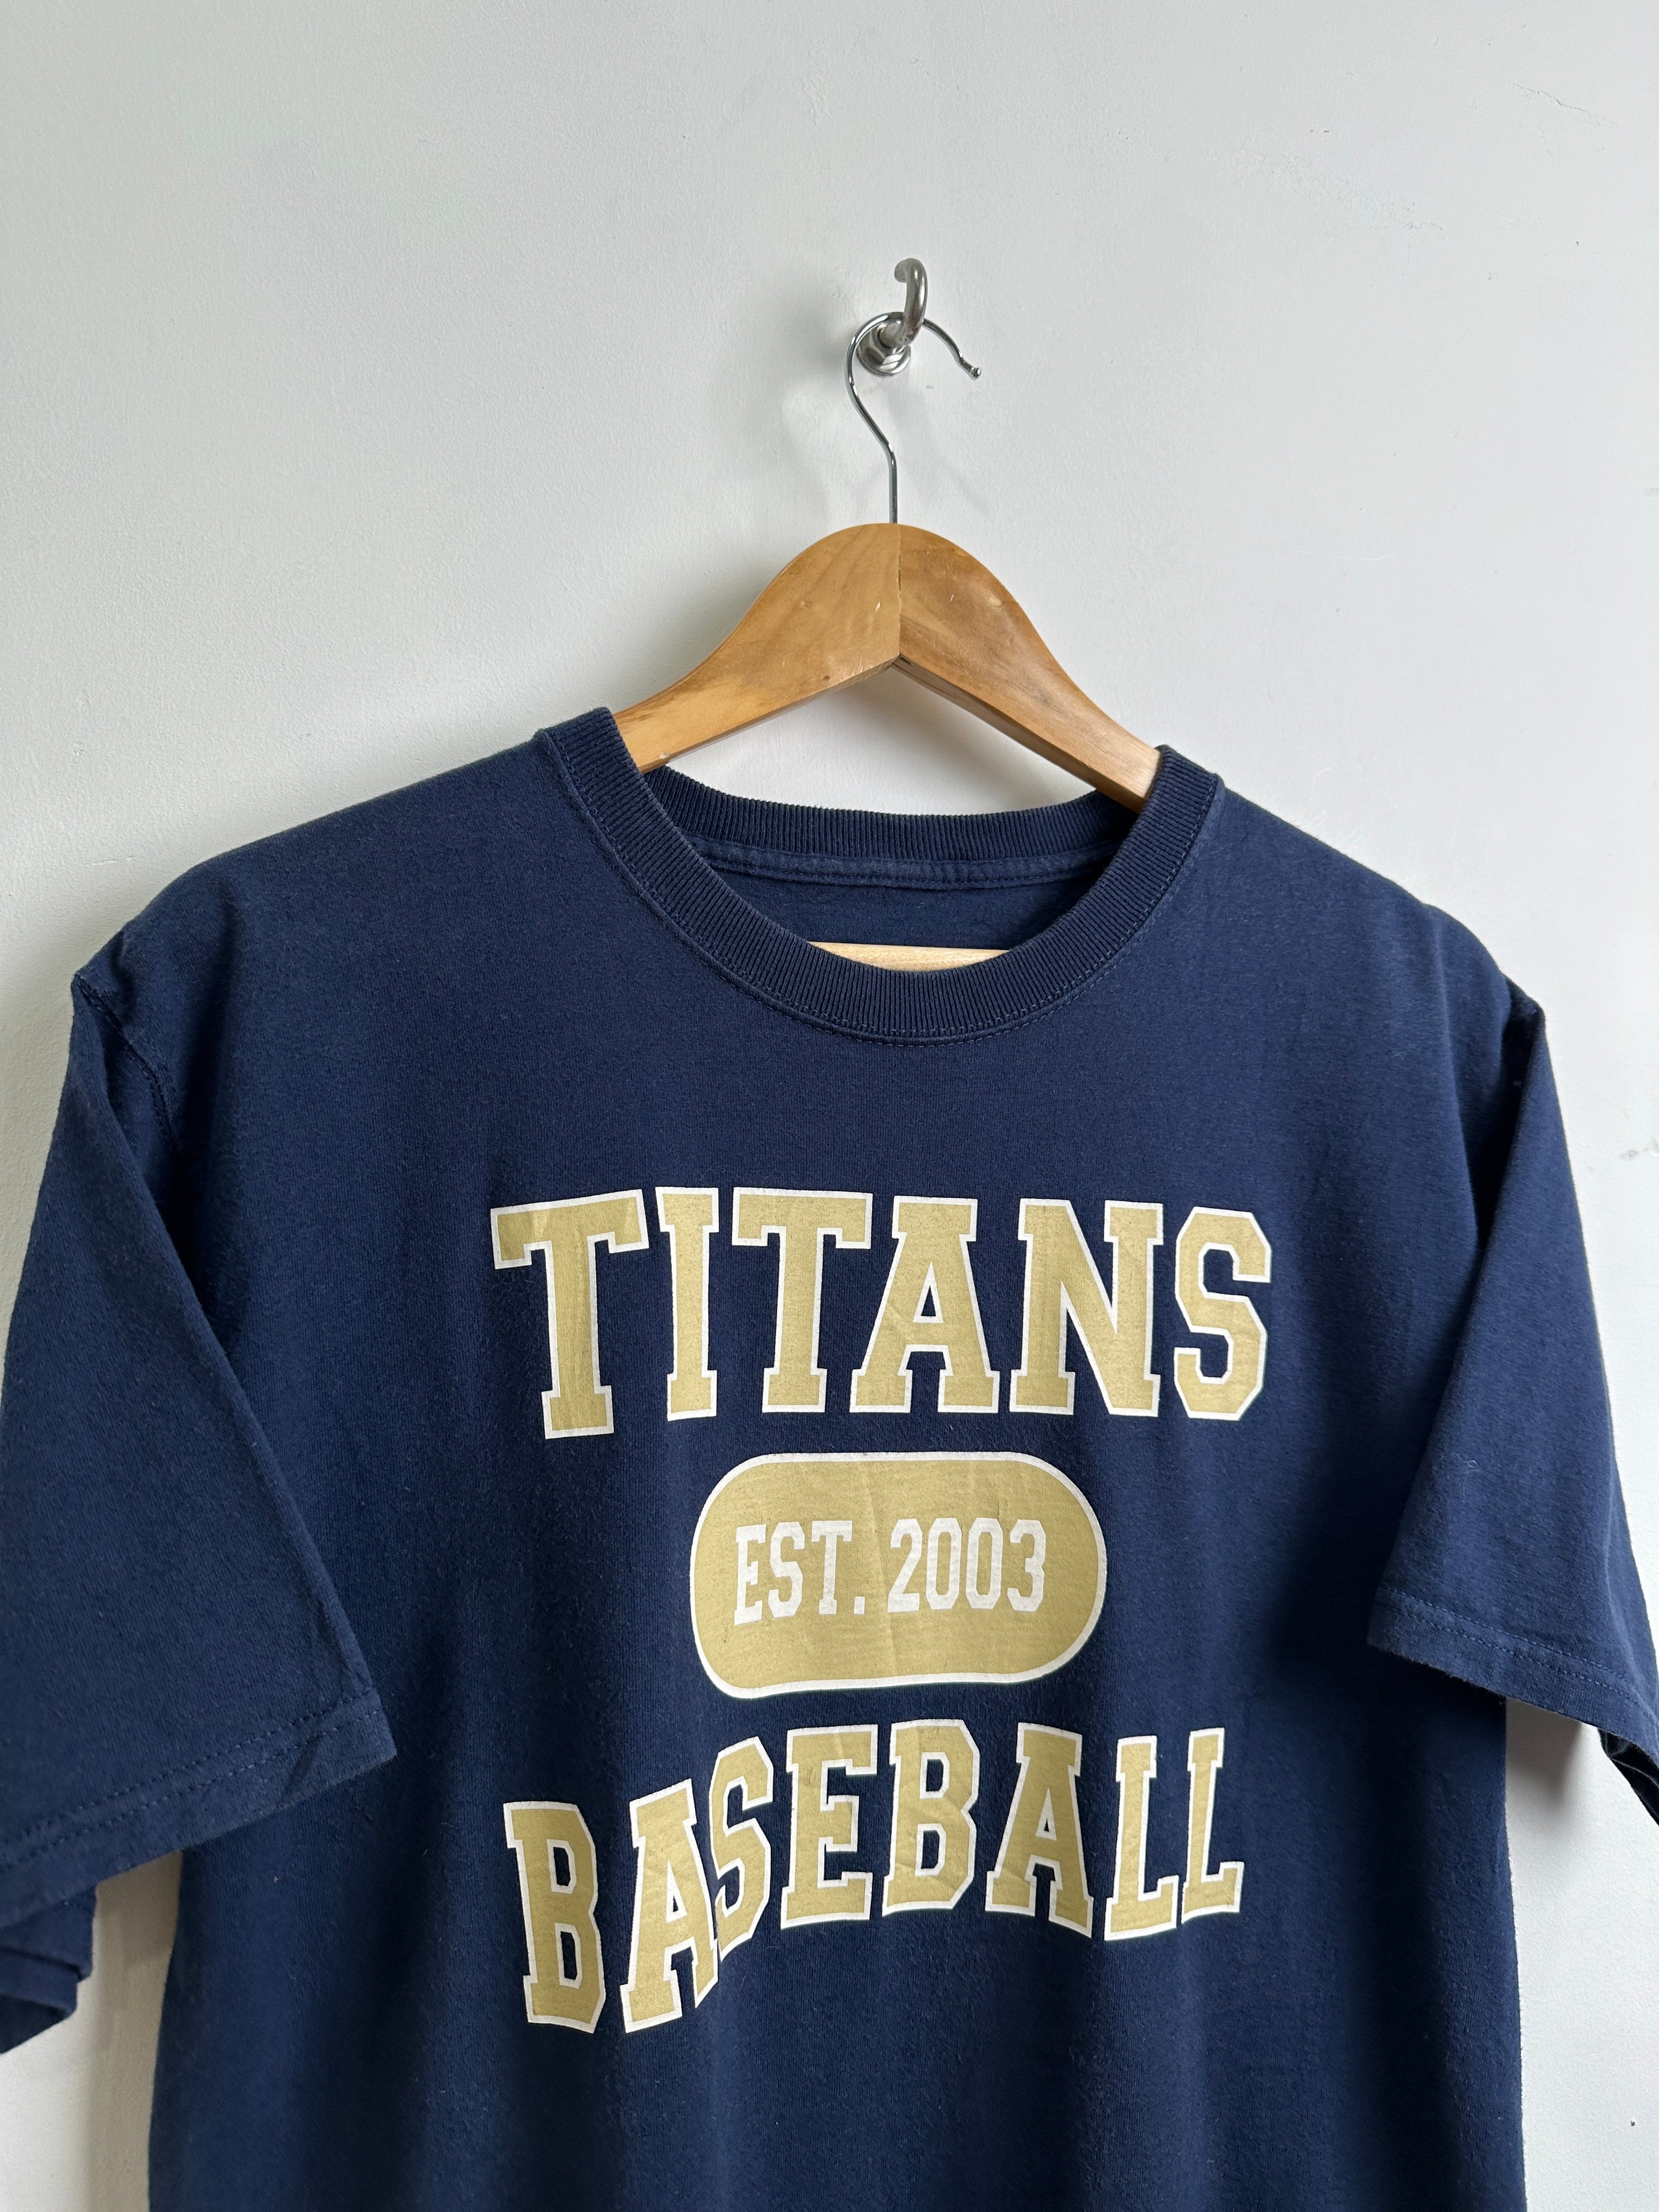 Titans Baseball tee in blue